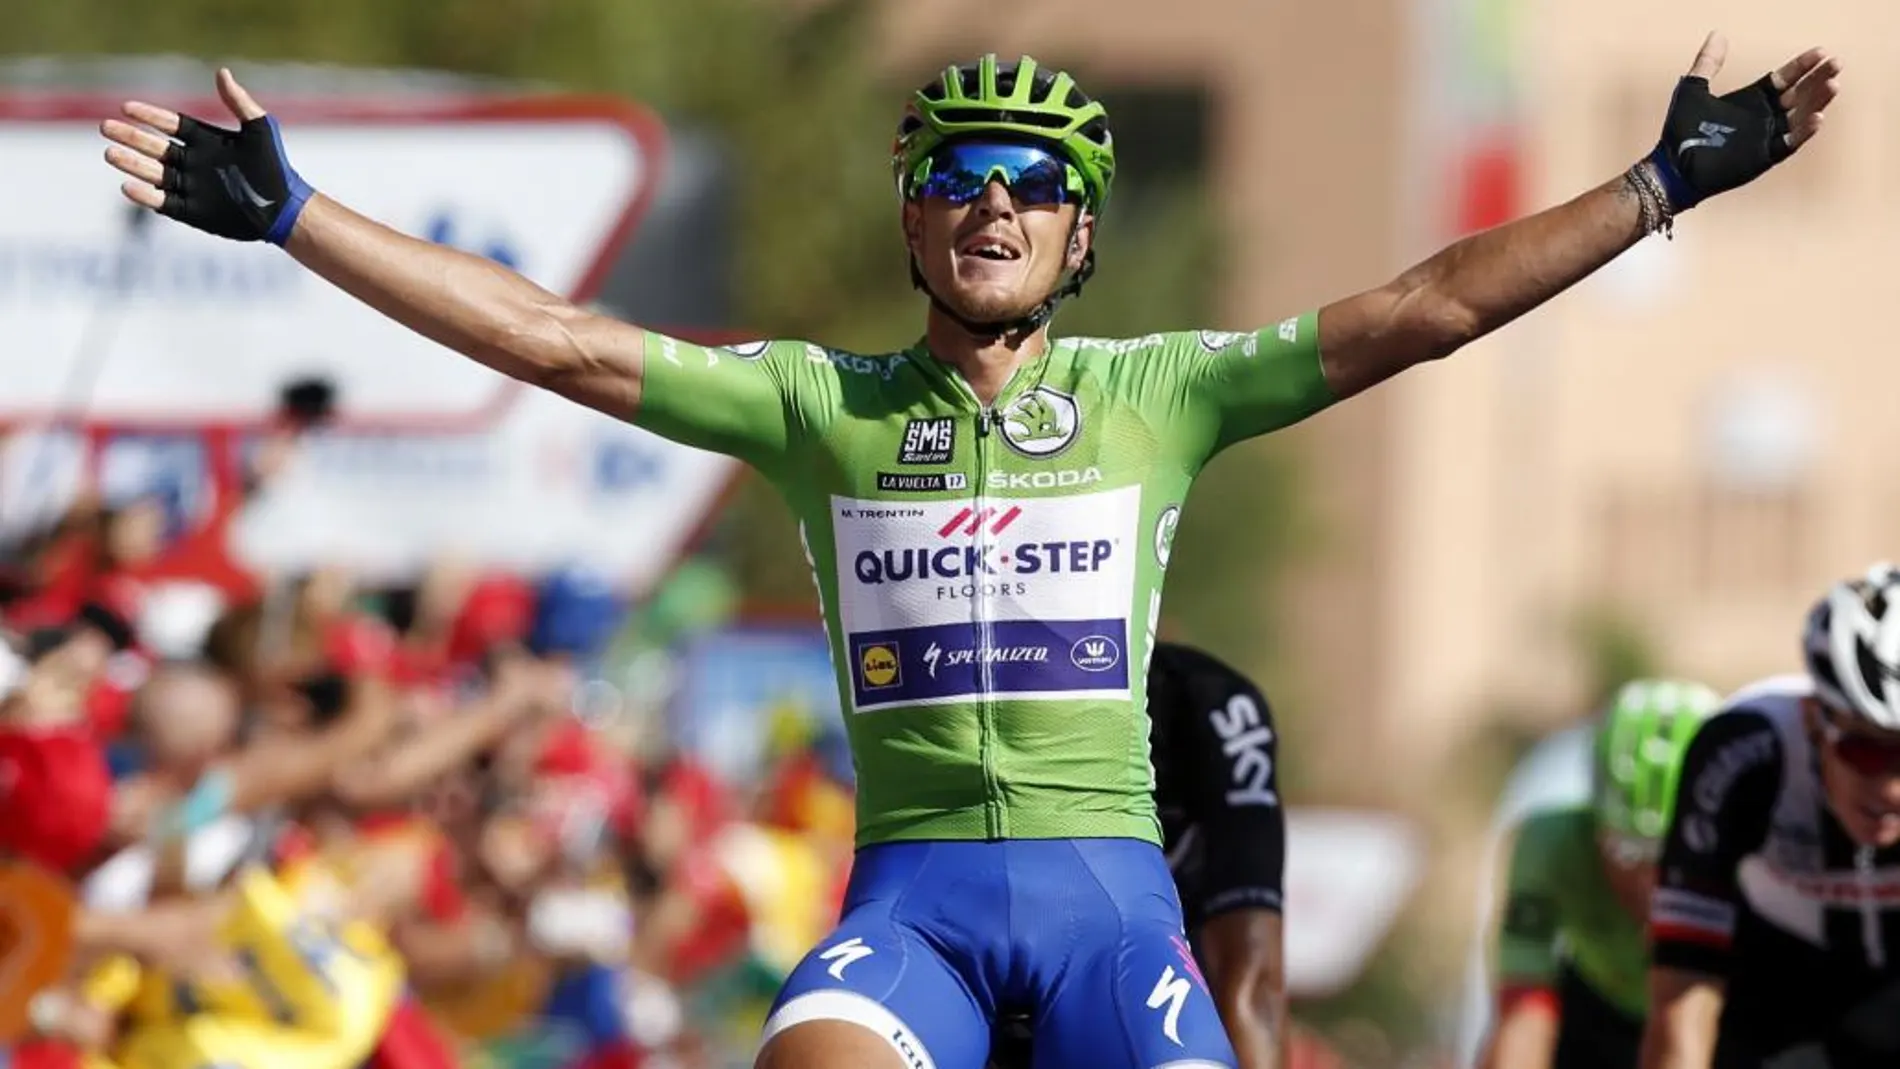 El italiano Matteo Trentín, se ha proclamado vencedor la decimotercera etapa de la Vuelta Ciclista a España, con meta Tomares.